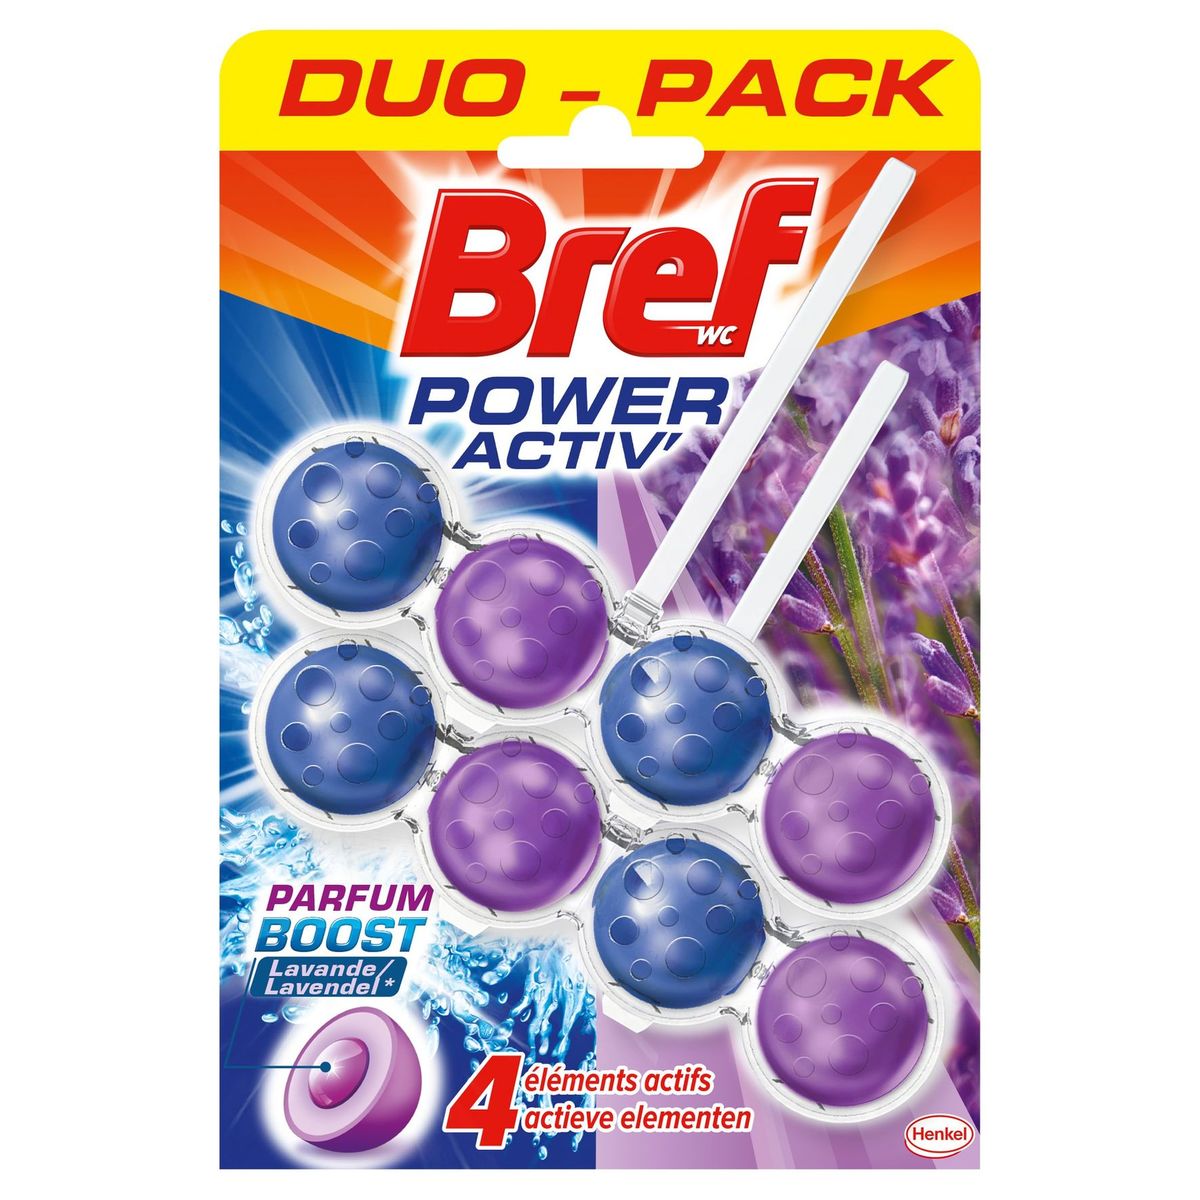 Bref WC Power Activ' Parfum Boost Lavendel Duo Pack 2 x 50 g